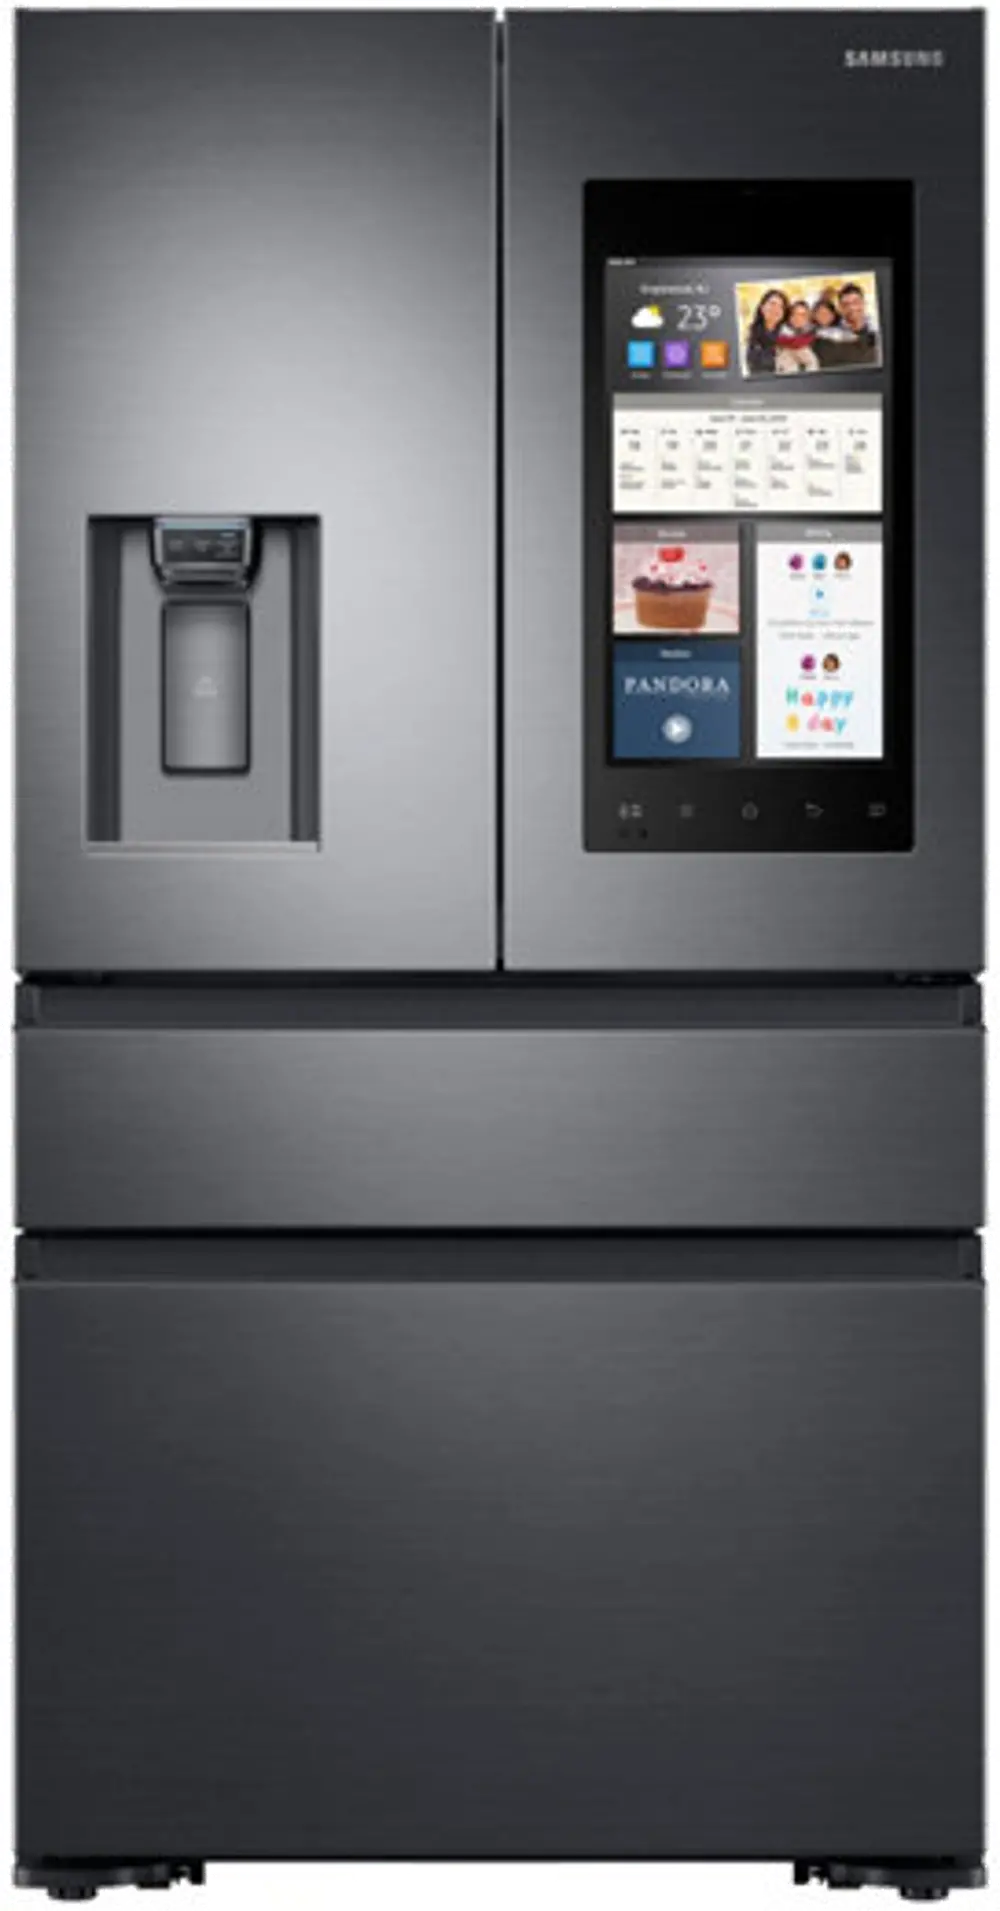 RF23M8570SG Samsung 33.3 cu ft 4 Door Refrigerator - Counter Depth Black Stainless Steel-1